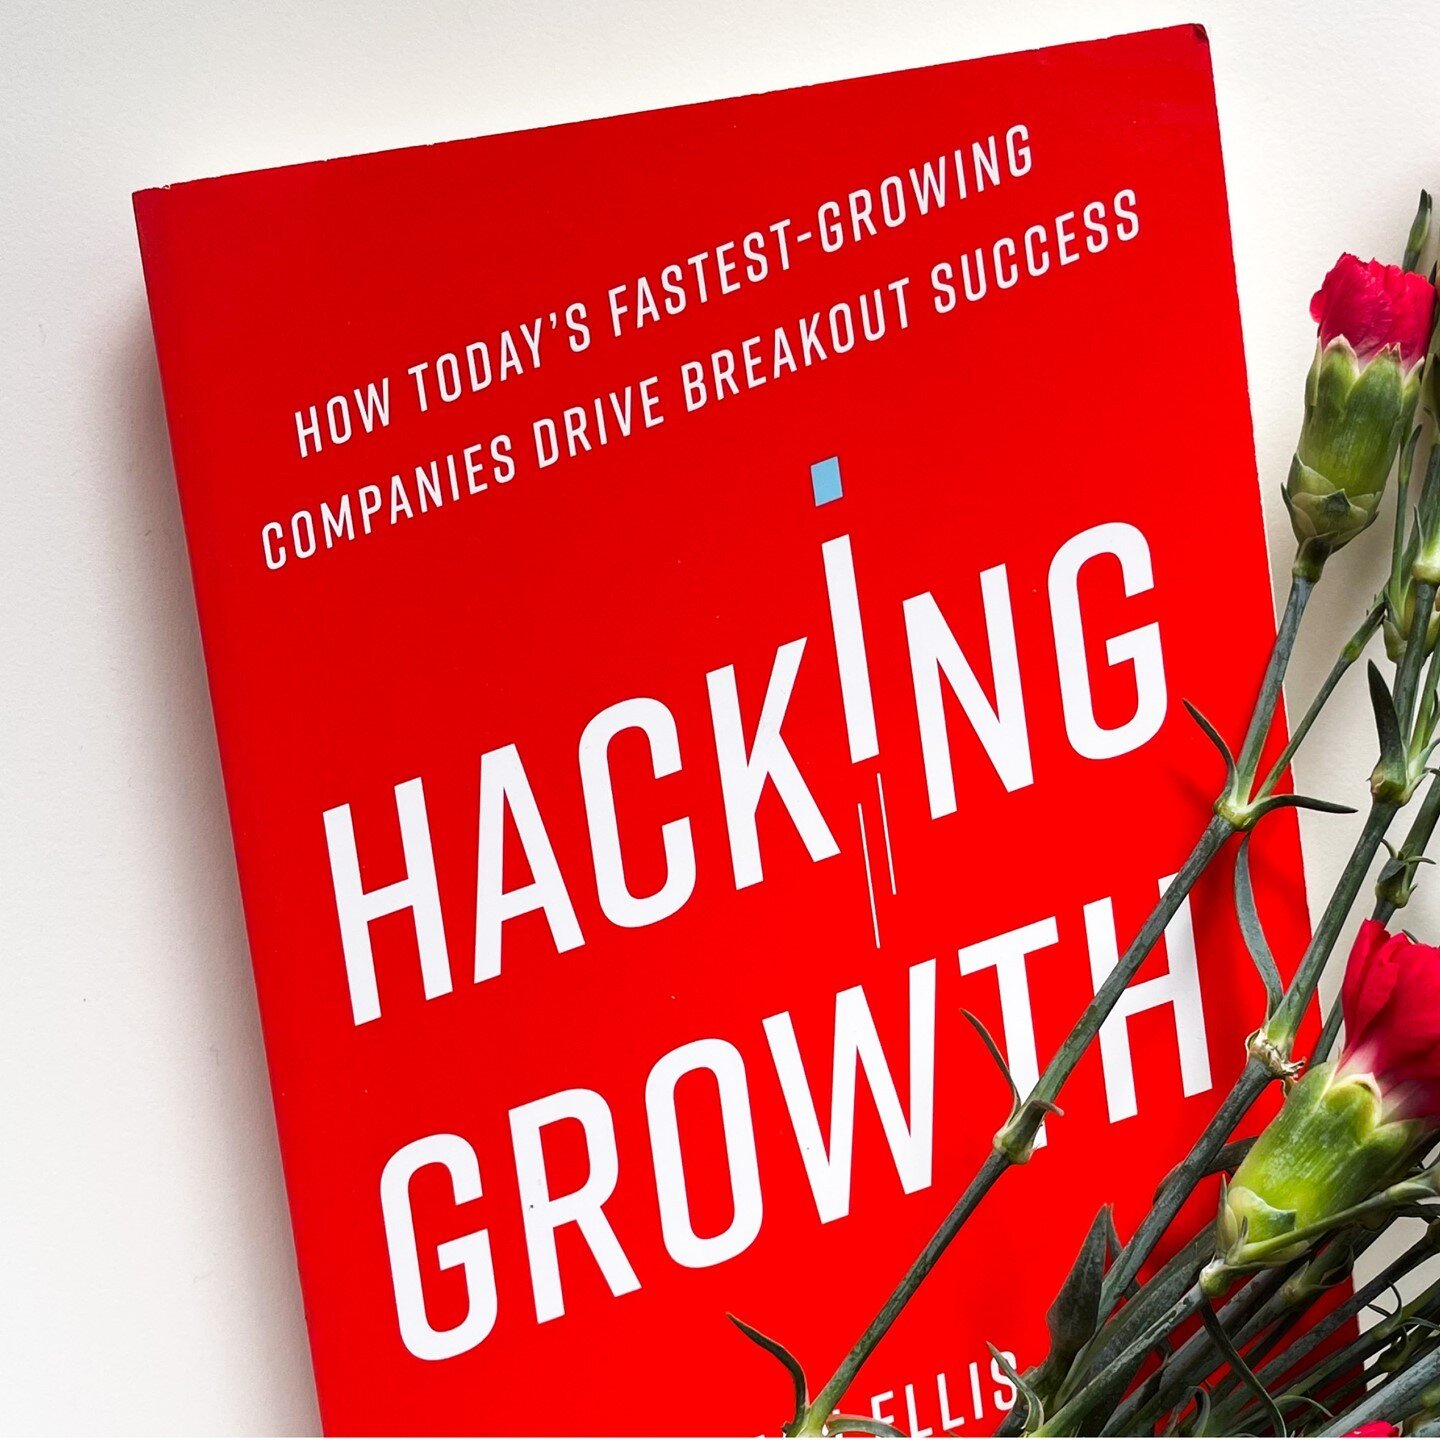 Definitely worth a read: &quot;Hacking Growth&quot; by Sean Ellis &amp; Morgan Brown ✌🏻
#growthhacking #wortharead #relax #educateyourself  #marketing #businessmethodologies #success  #tuesdayvibes  #marketingspecialist #design #businessdevelopment 